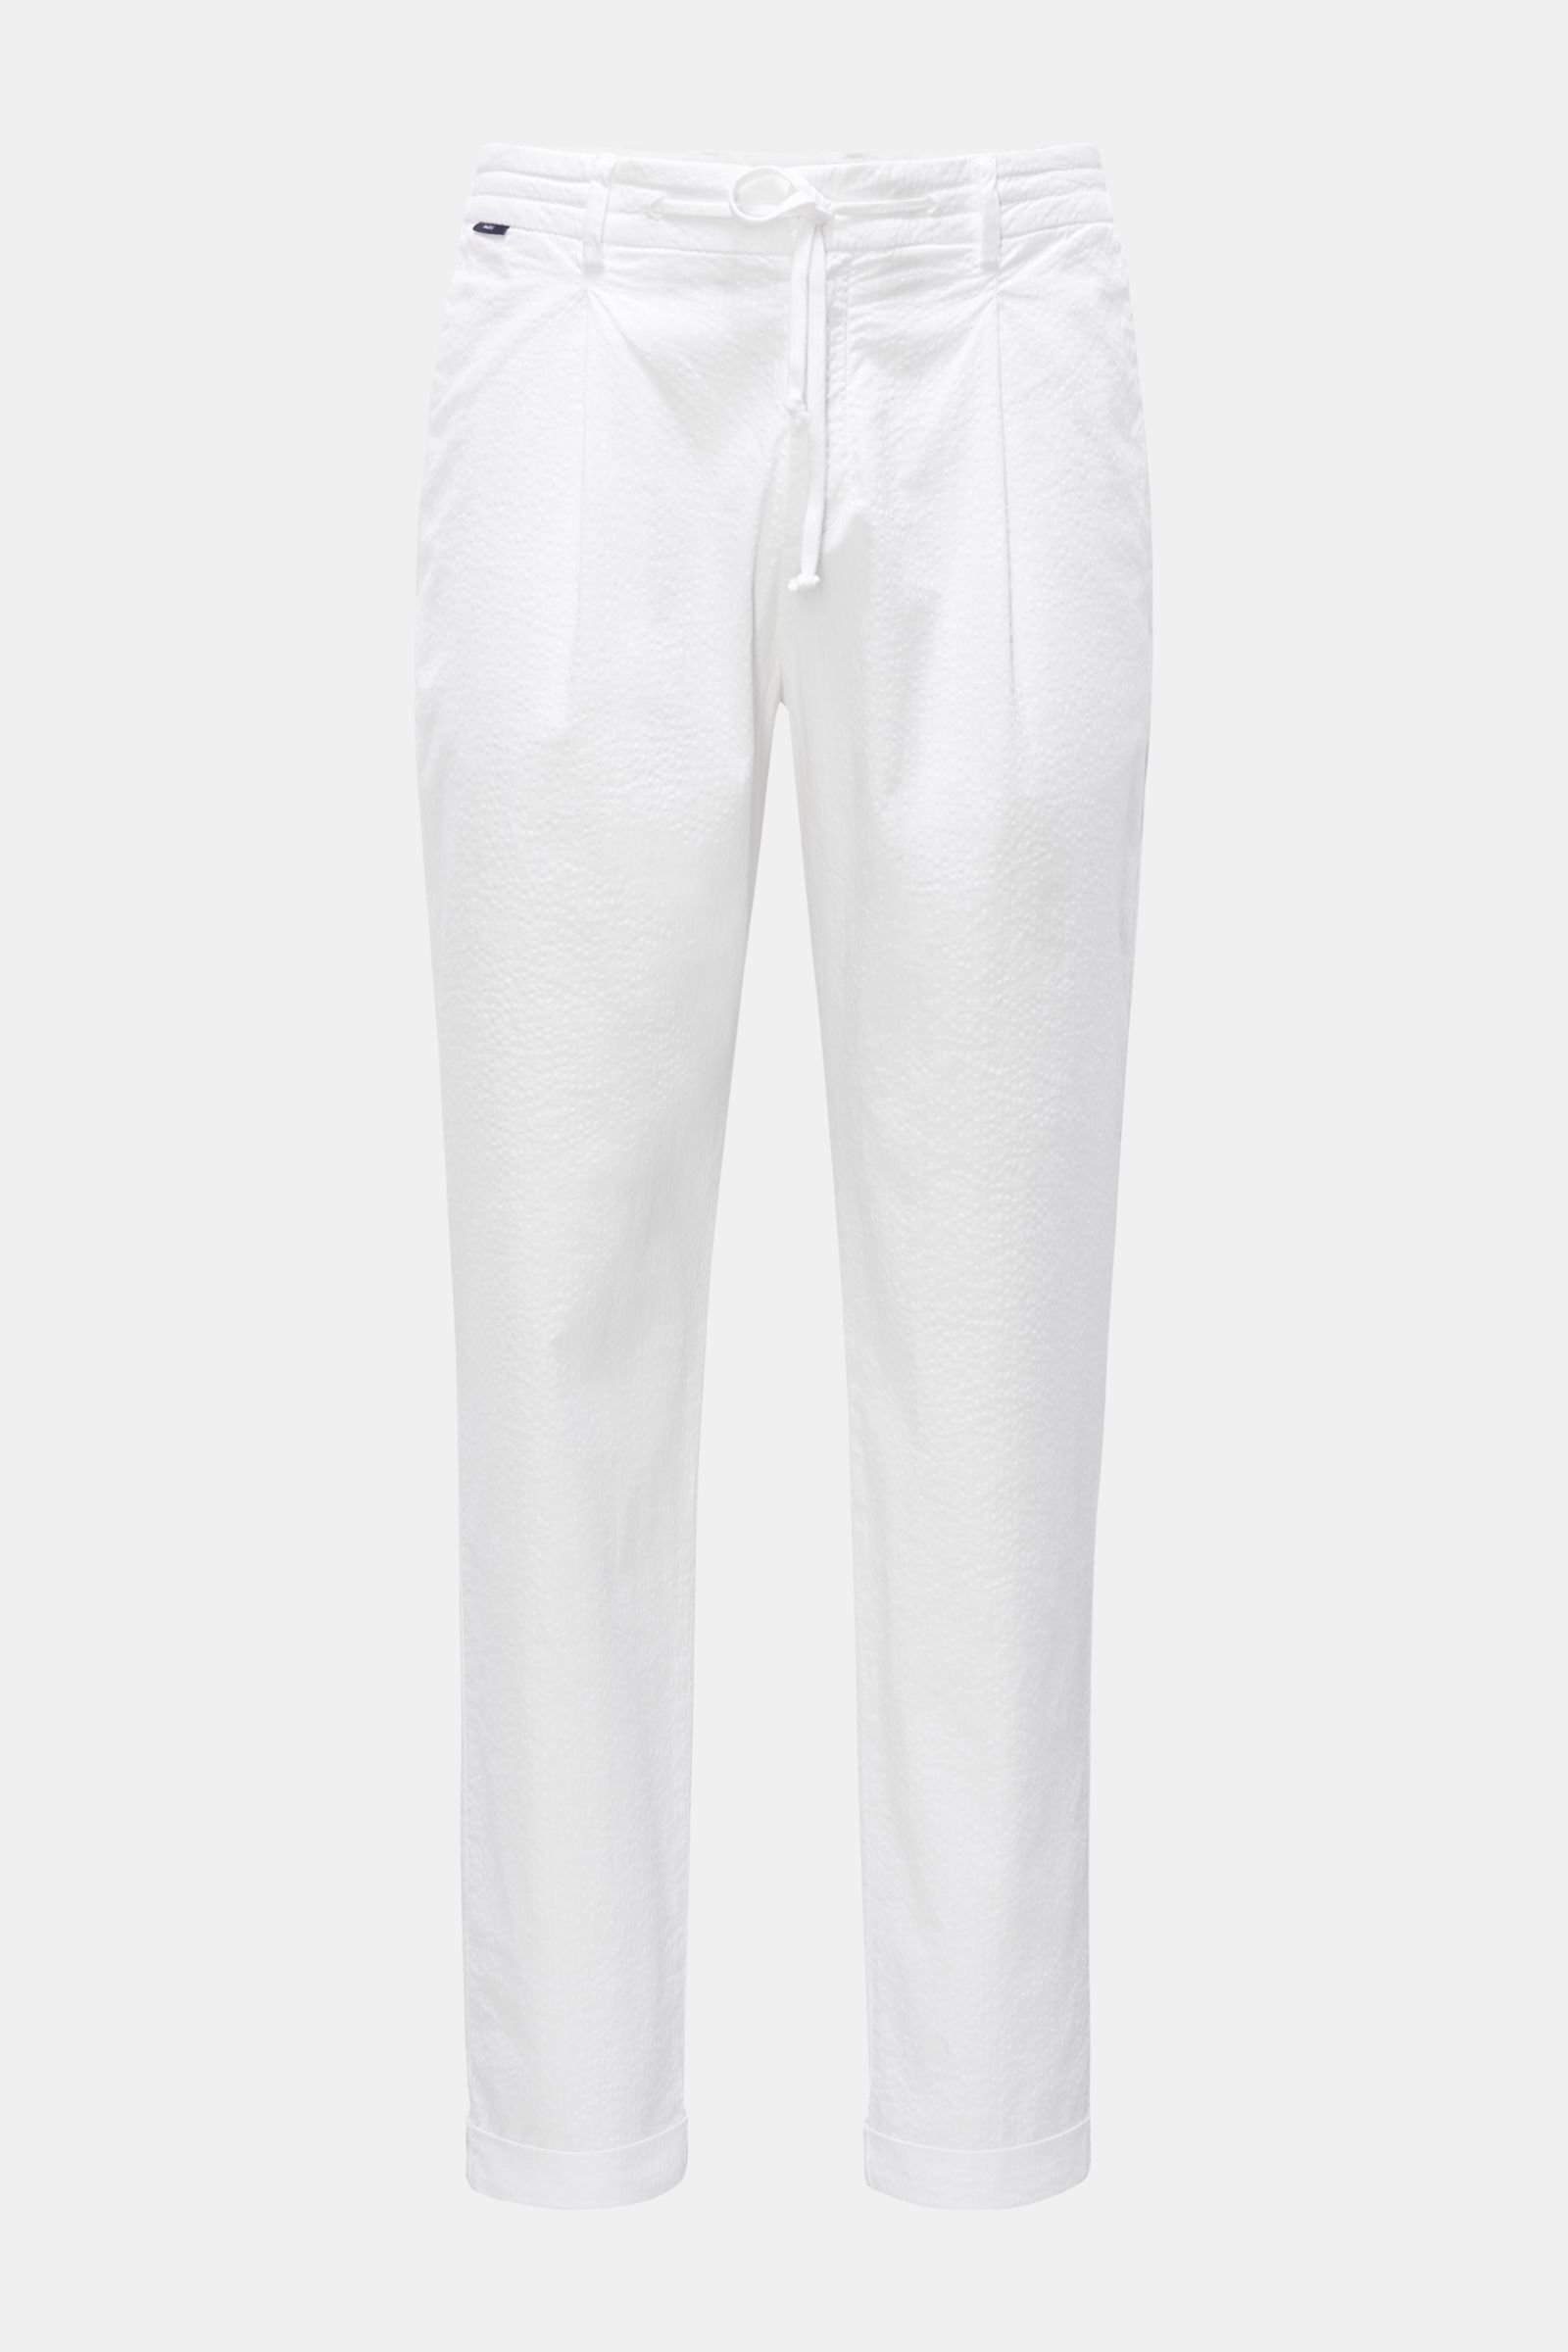 Seersucker jogger pants white